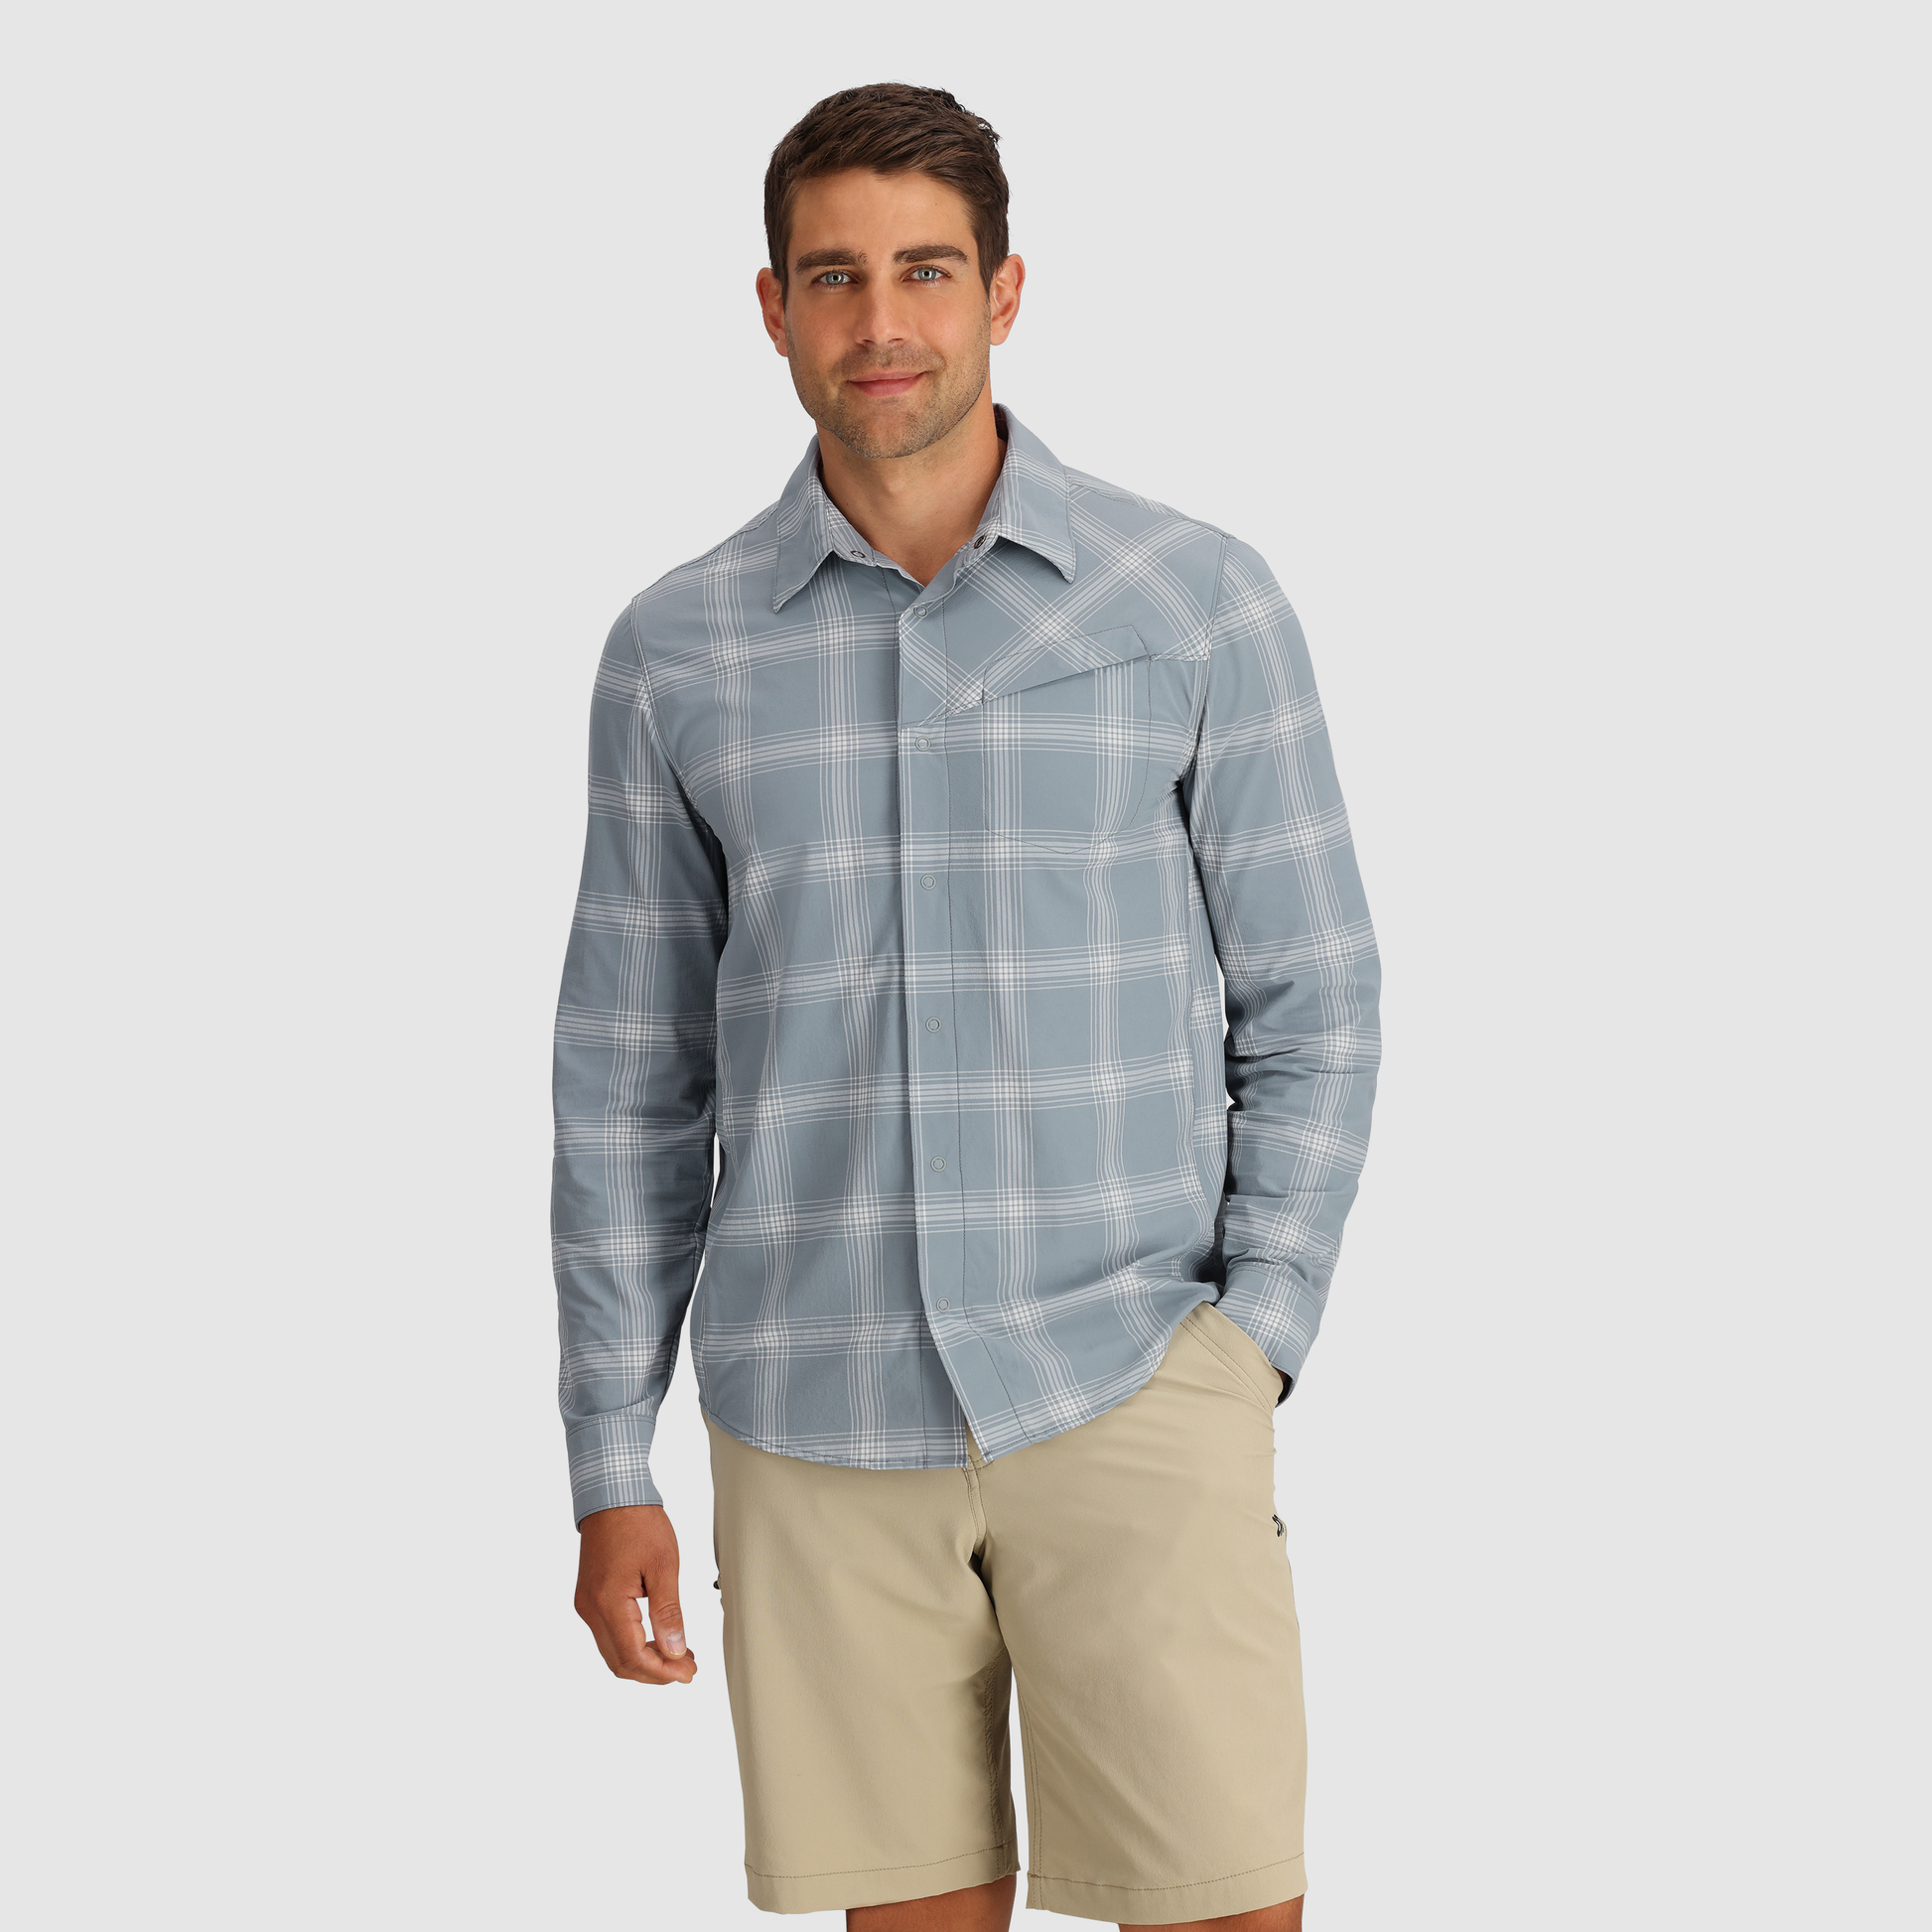 Men's Summer Sun Protection Clothing, Thin Sports Leisure Breathable Shirt,  Sunwear Coat, Ultra Thin Jacket Shirt Short Men